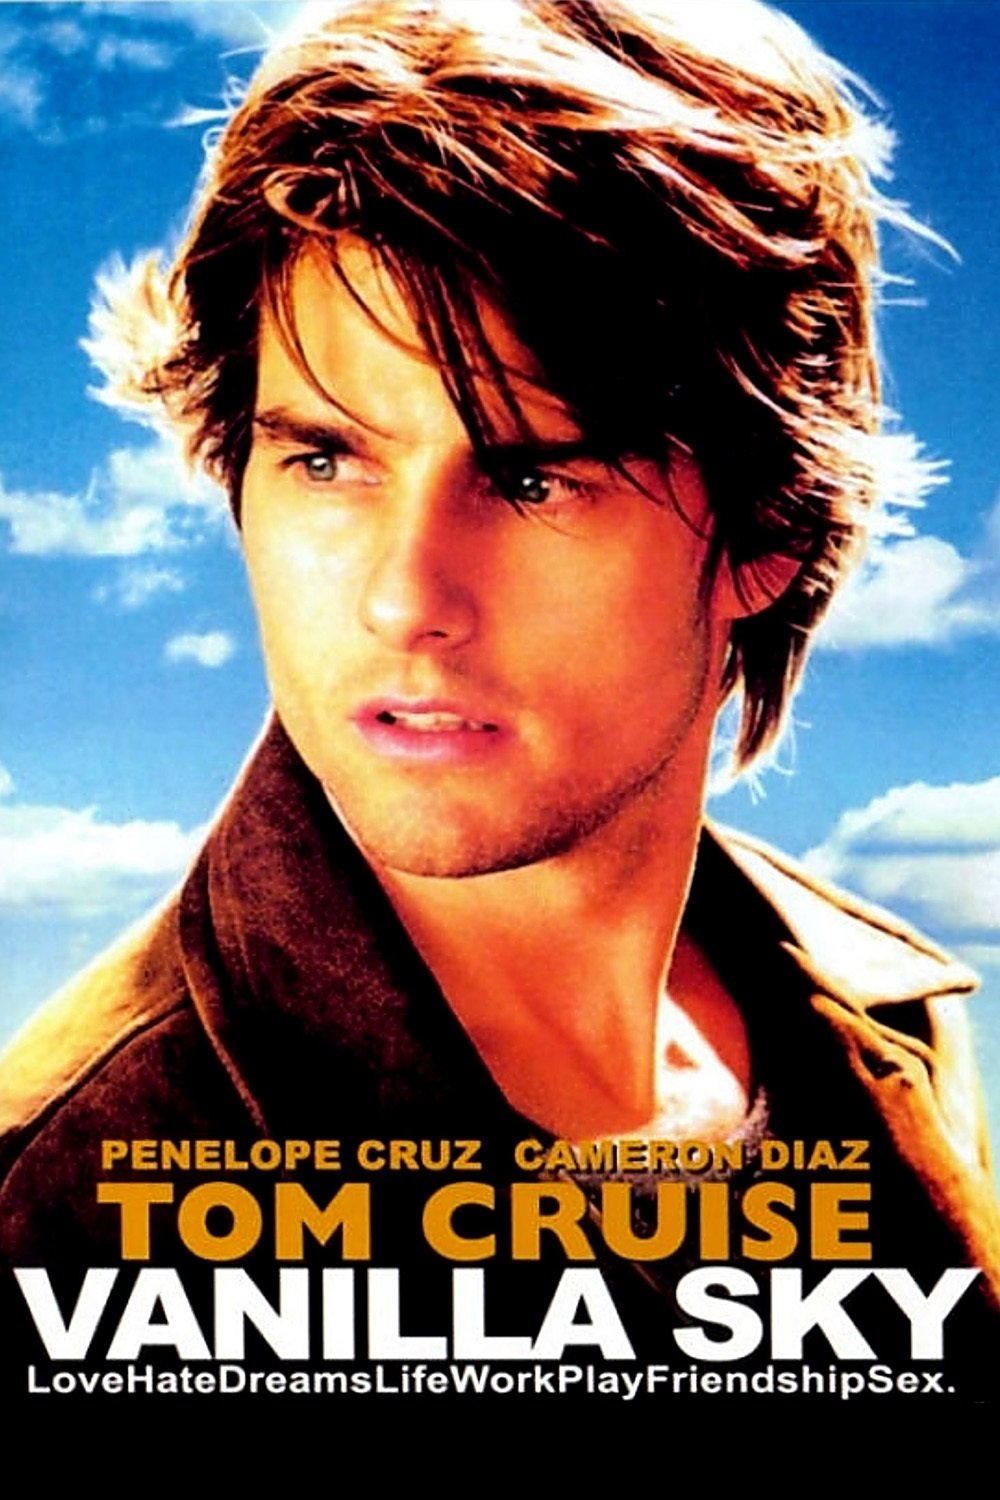 tom cruise in vanilla sky